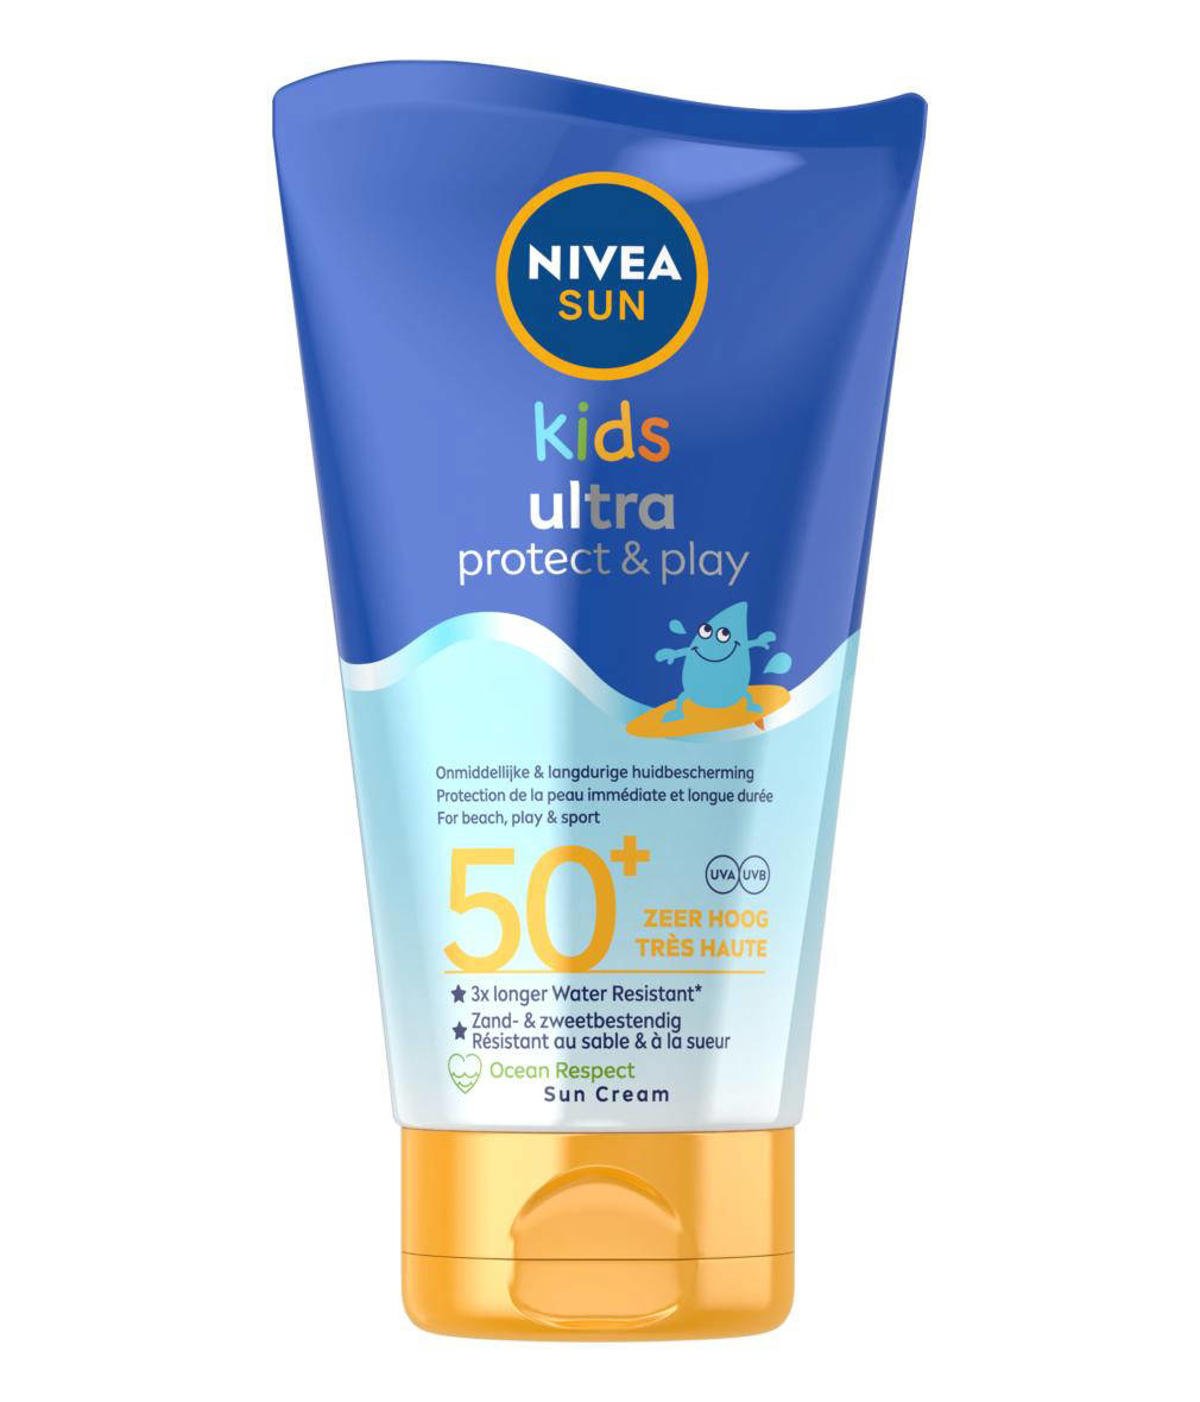 Opknappen Sada lettergreep NIVEA SUN Kids Ultra Protect & Moisture zonnebrand SPF50 - 150 ml | wehkamp